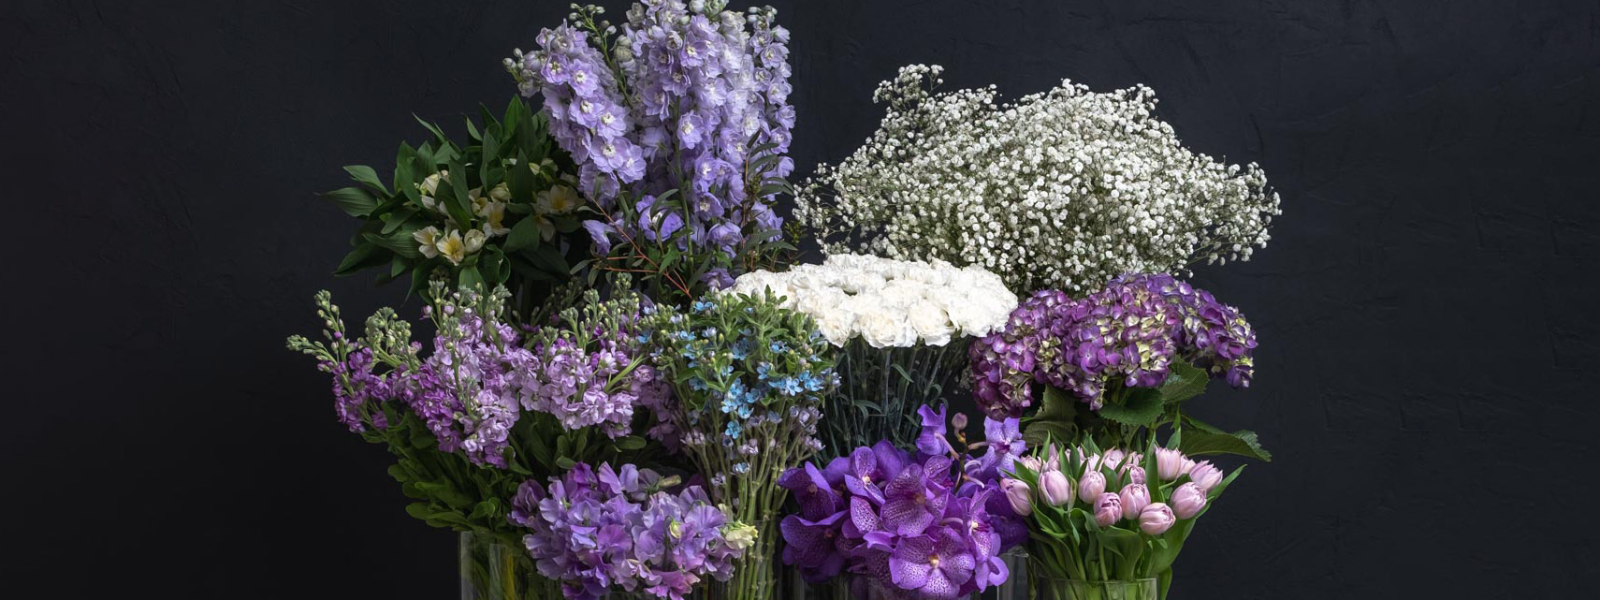 LILLEOAAS OÜ - pots and vases, e-shop, Events, bouquet flowers, indoor plants, funeral arrangements and wreaths, Wedding ...